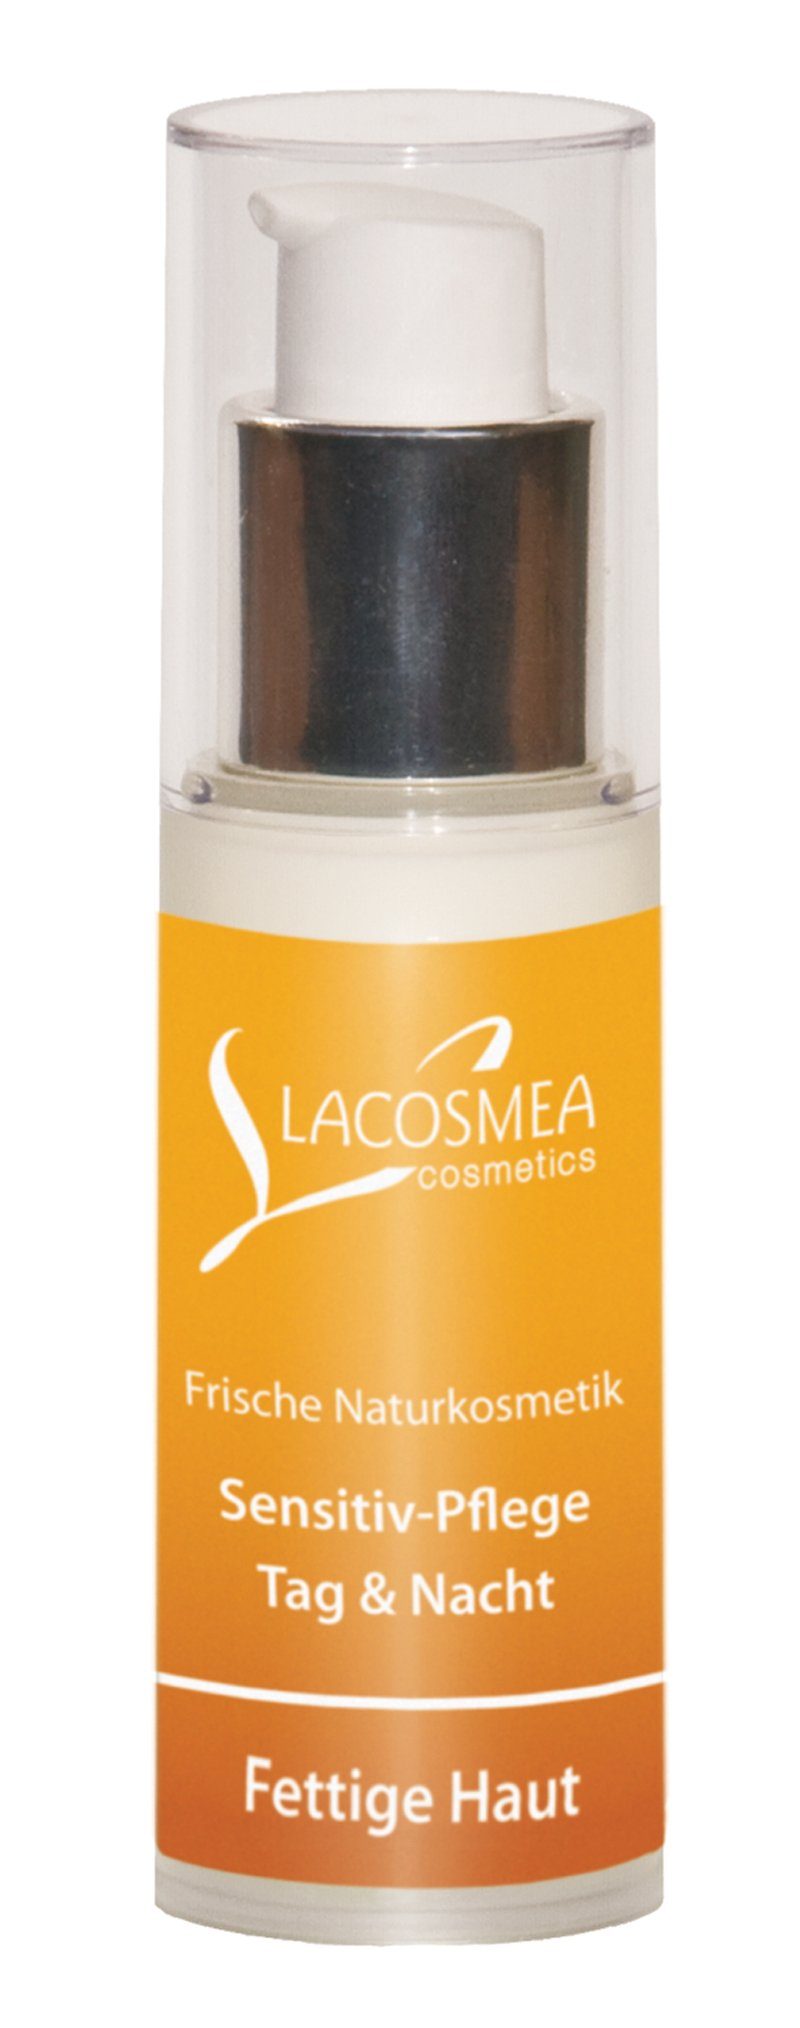 Lacosmea Cosmetics Gesichtspflege Sensitivpflege für fettige Haut